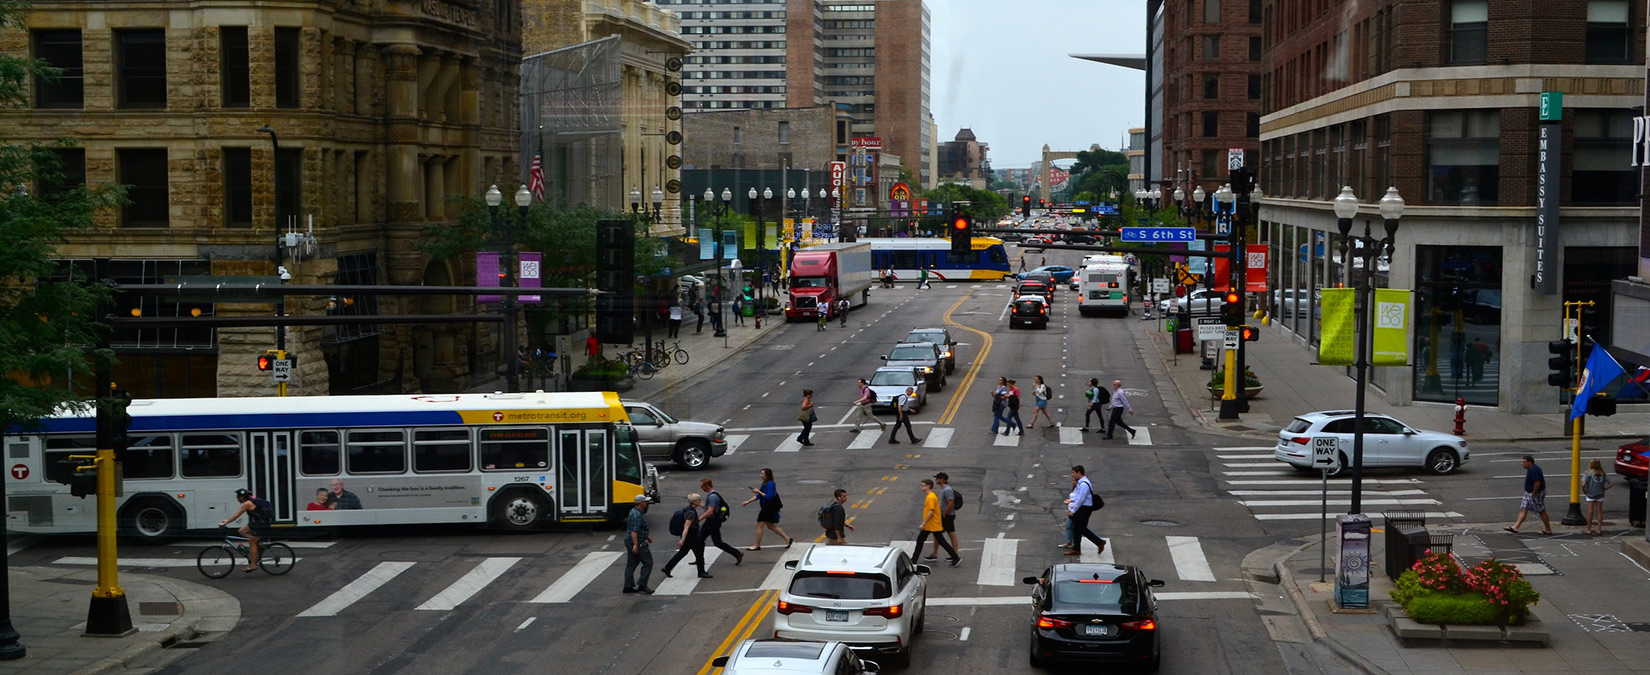 Minneapolis intersection showing pedestrians, bikers and bus, light rail alongside cars.